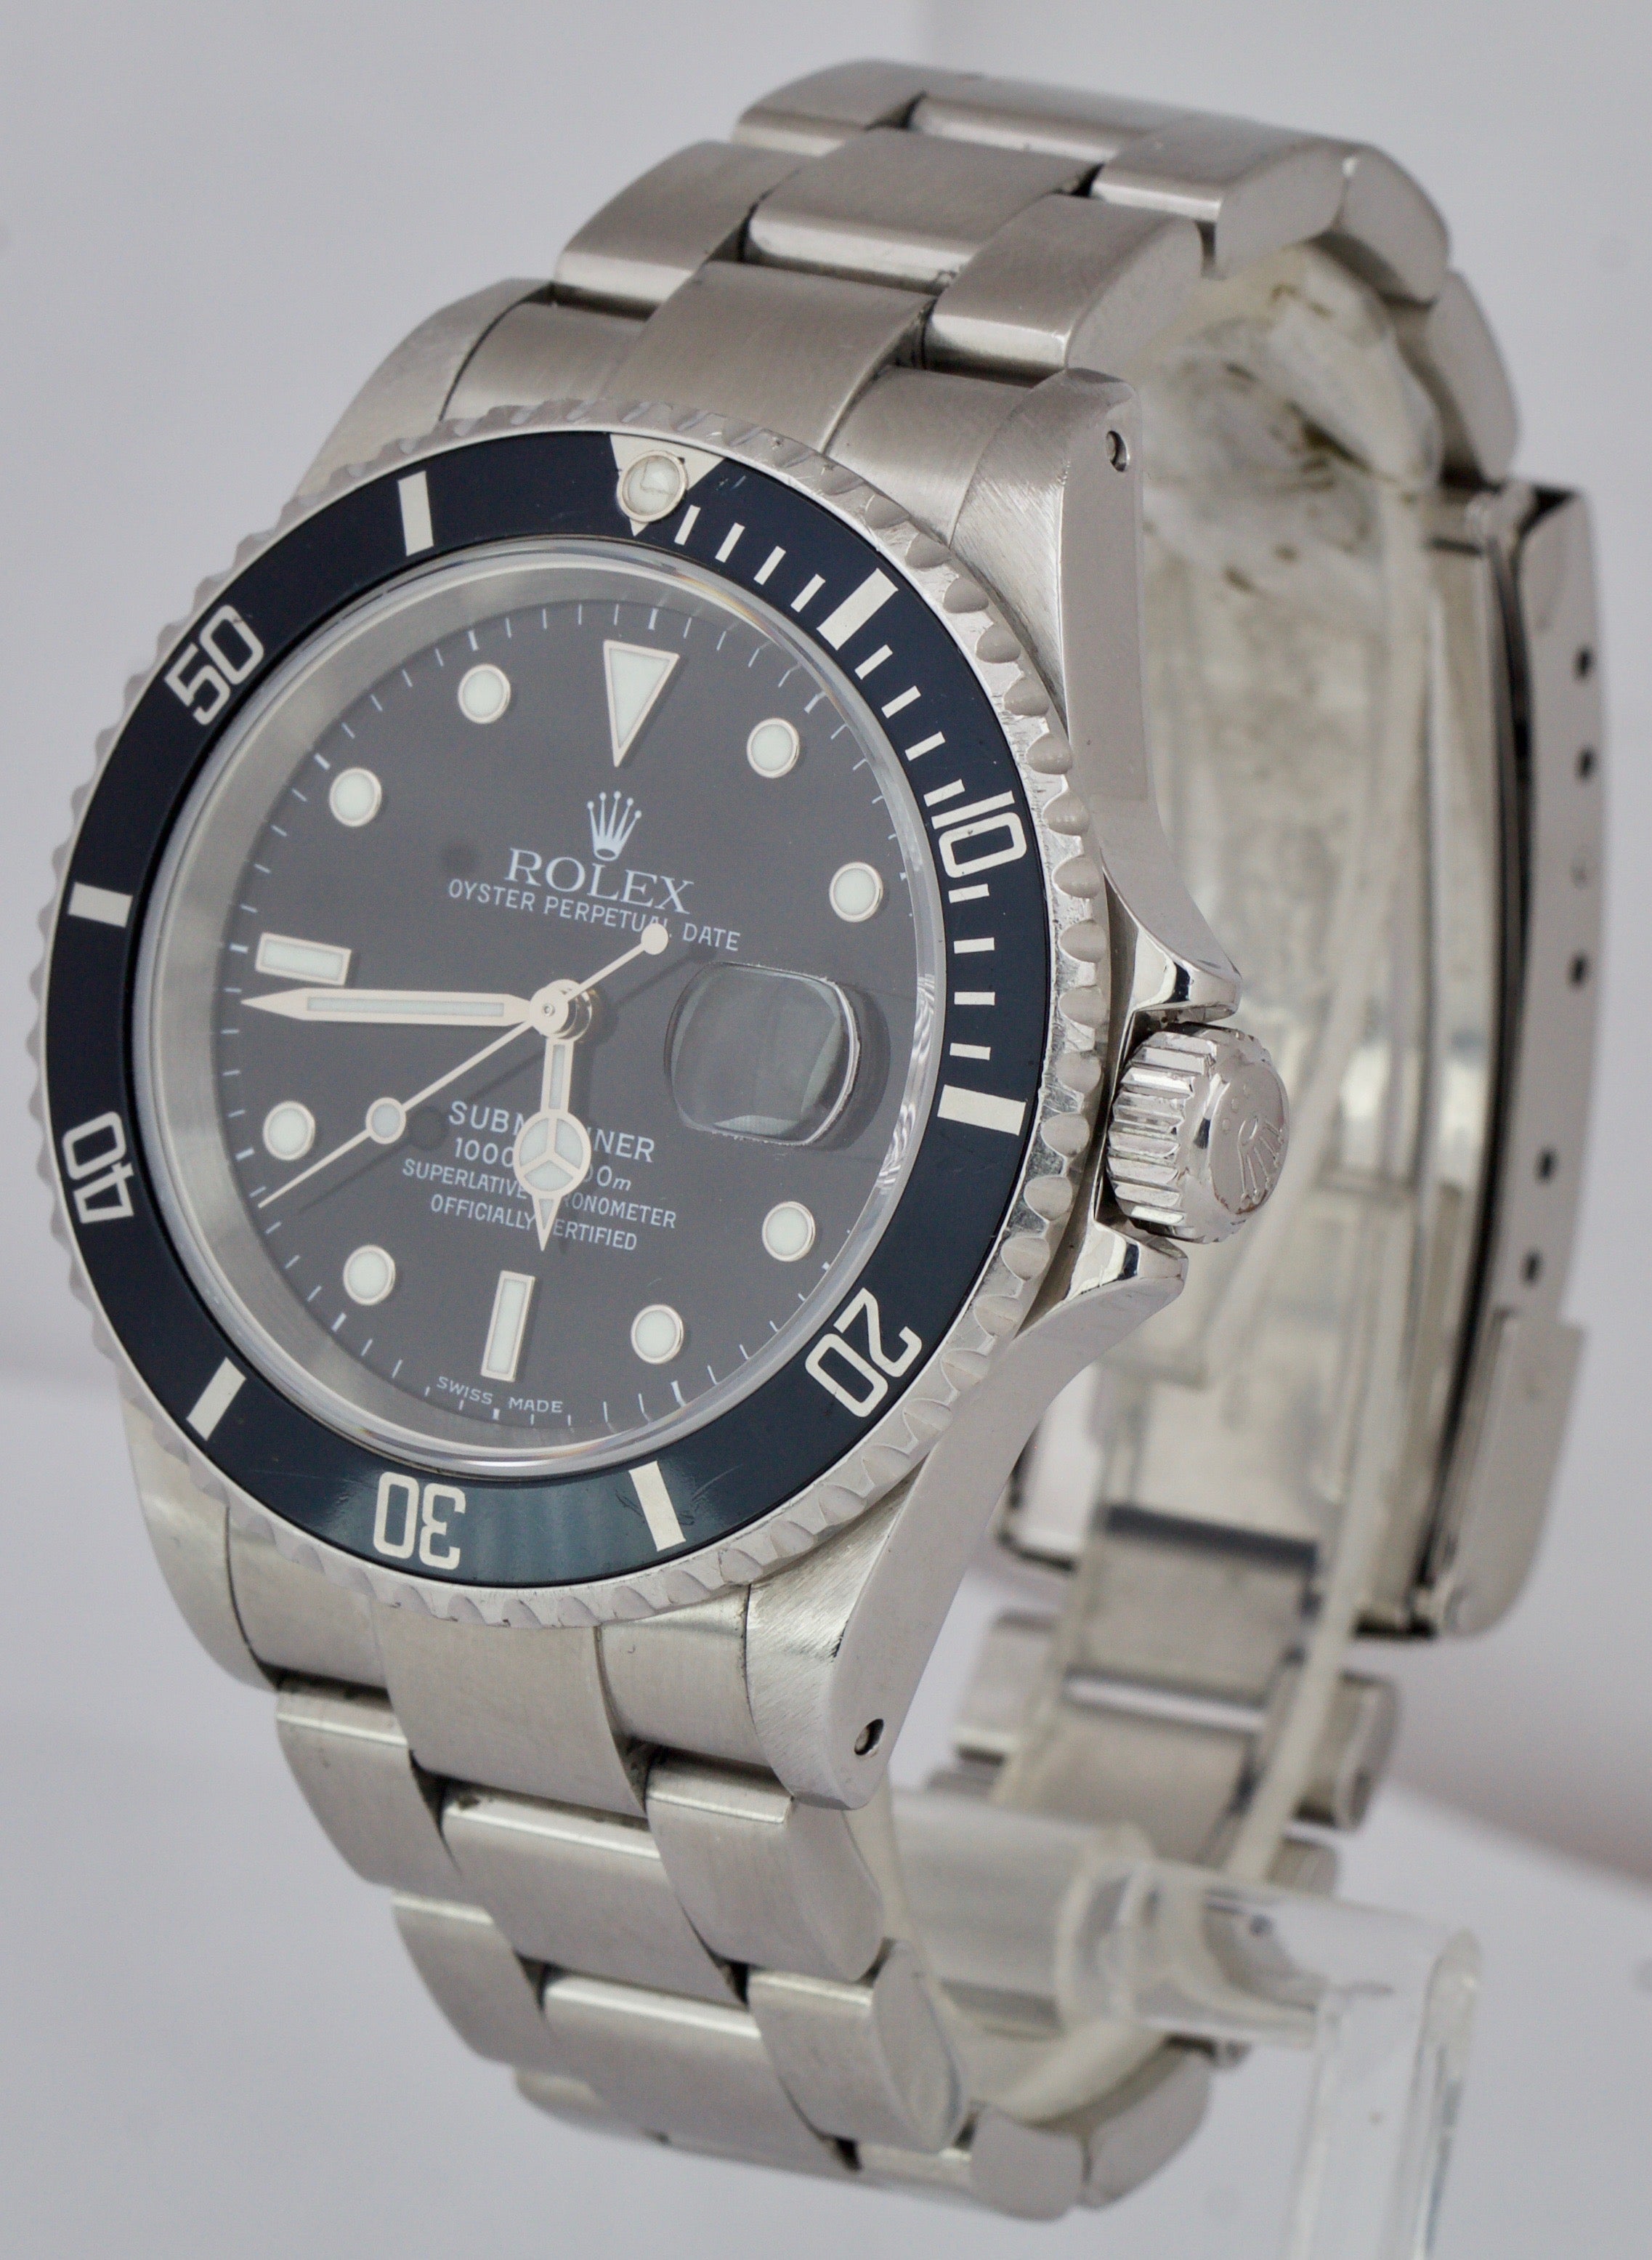 2003 Men's Rolex Submariner Date 16610 40mm Black Stainless Steel SEL Watch B+P